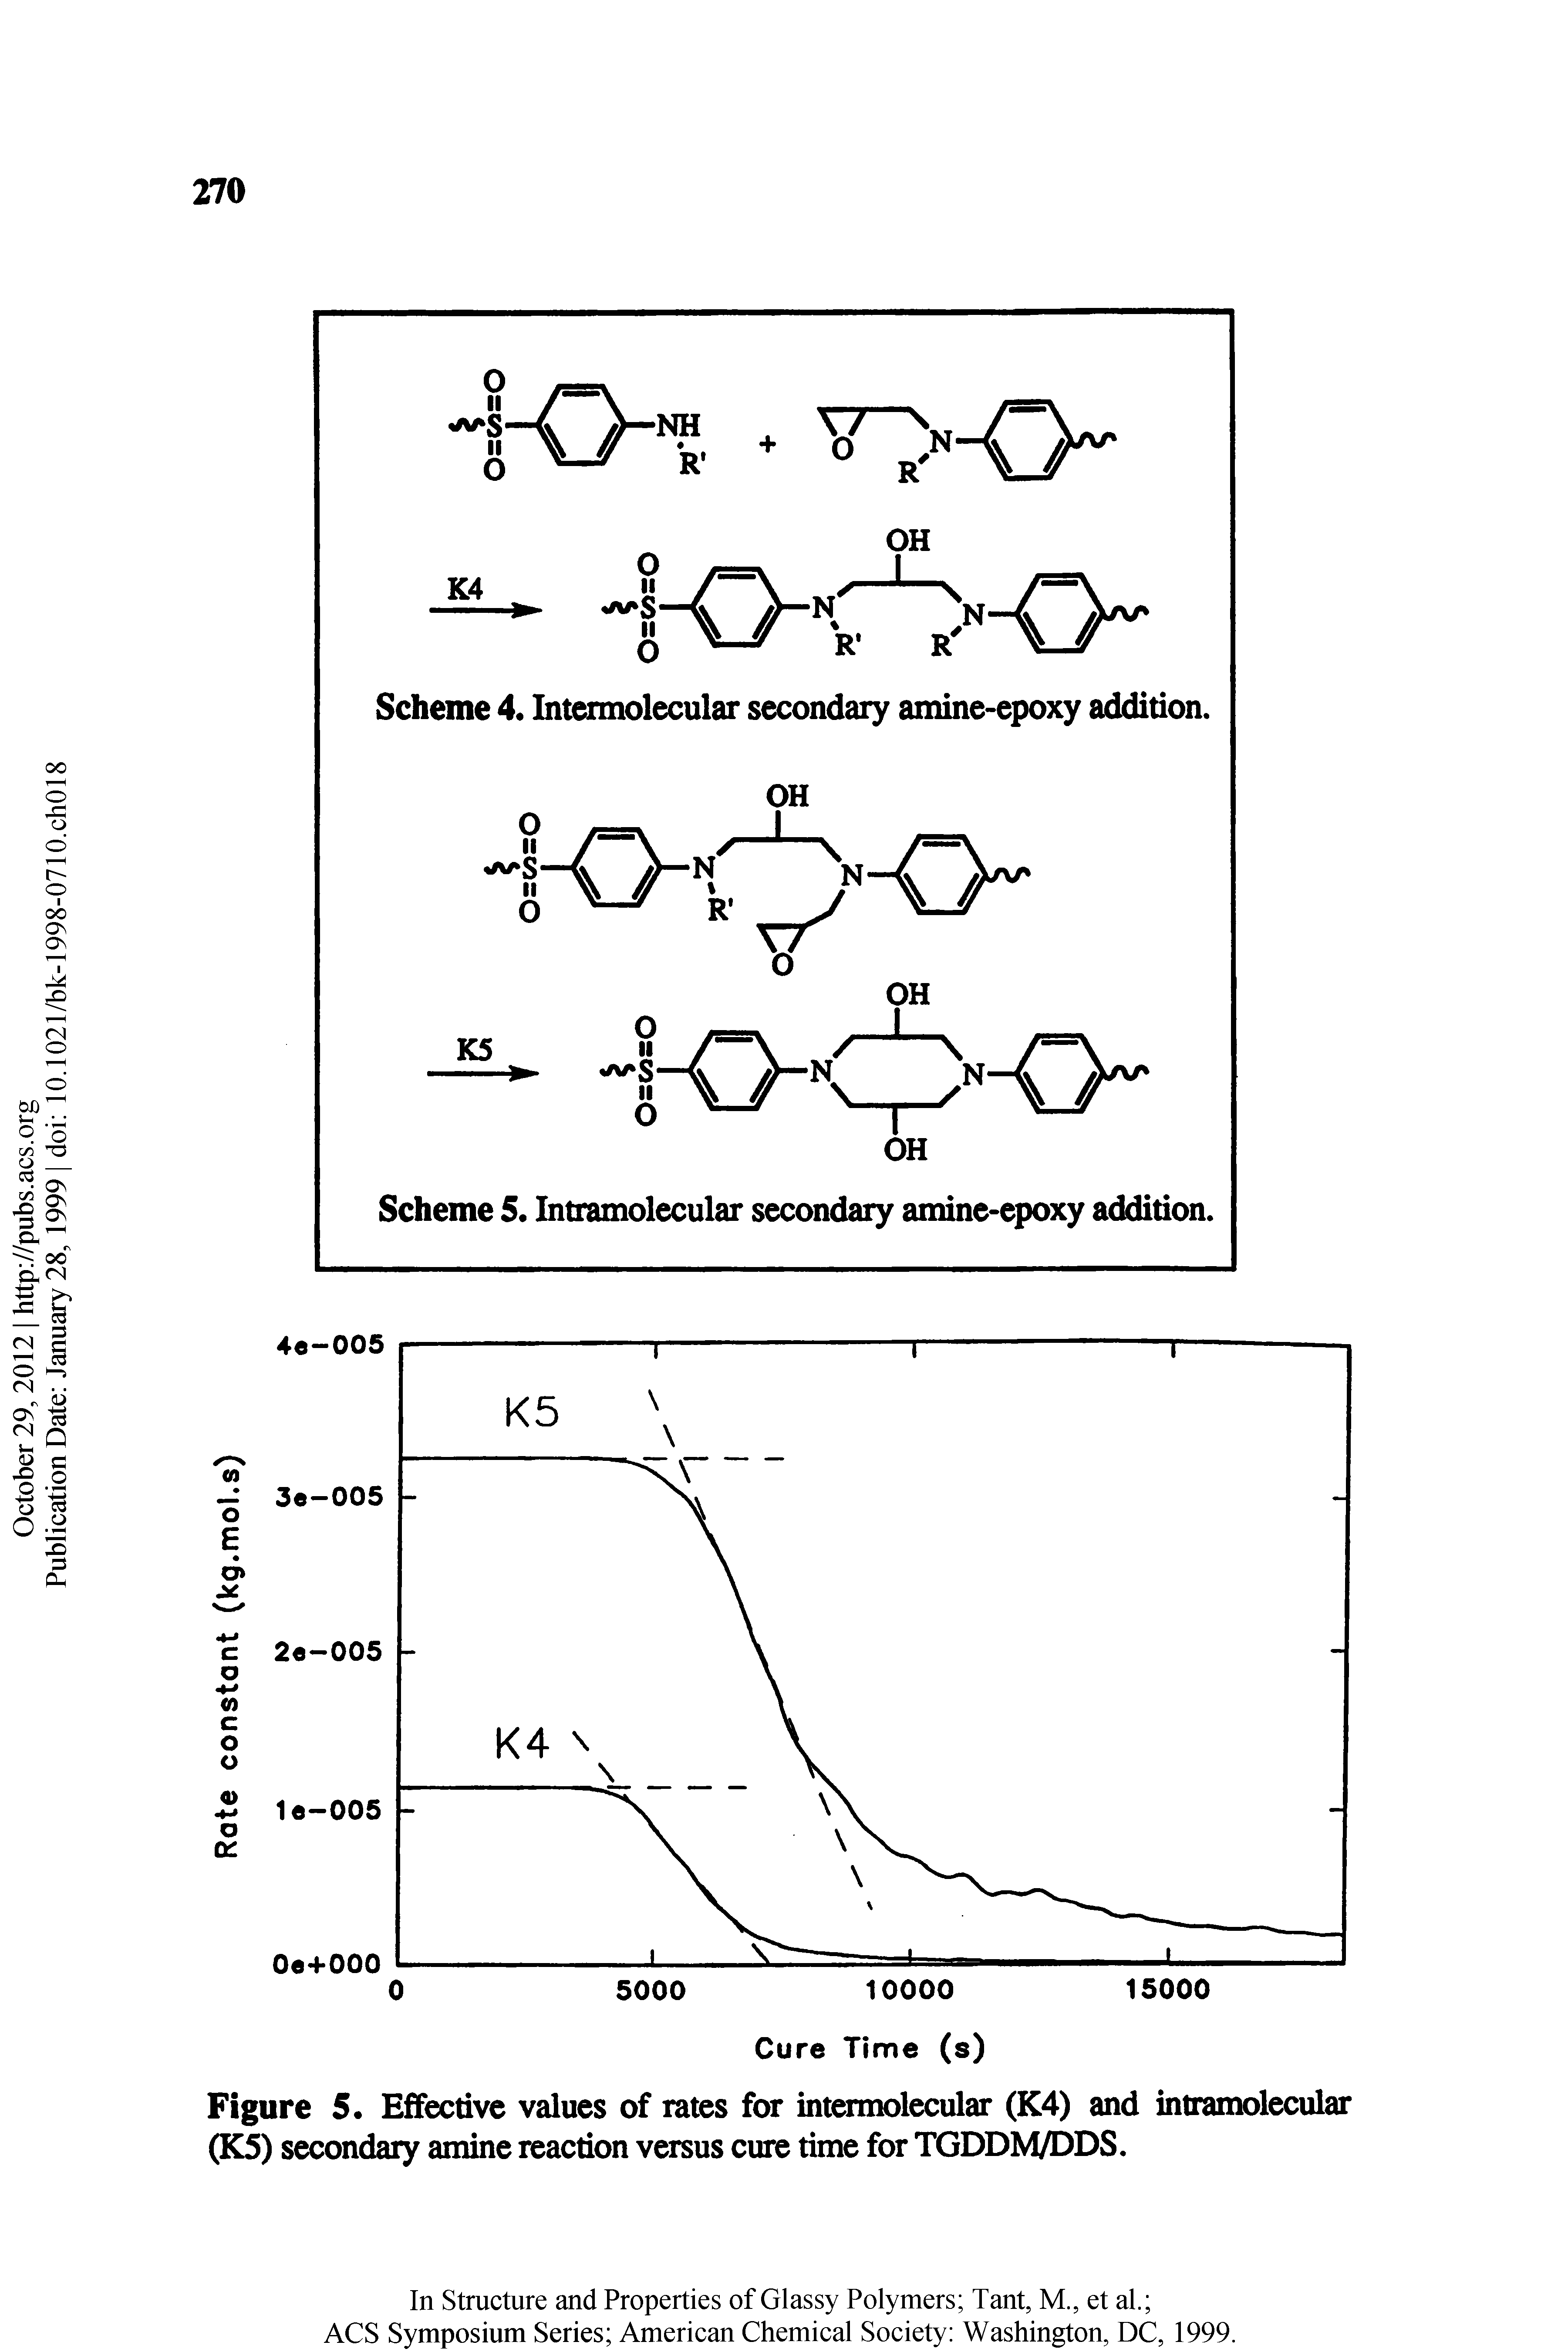 Scheme 5. Intramolecular secondary amine-epoxy addition.